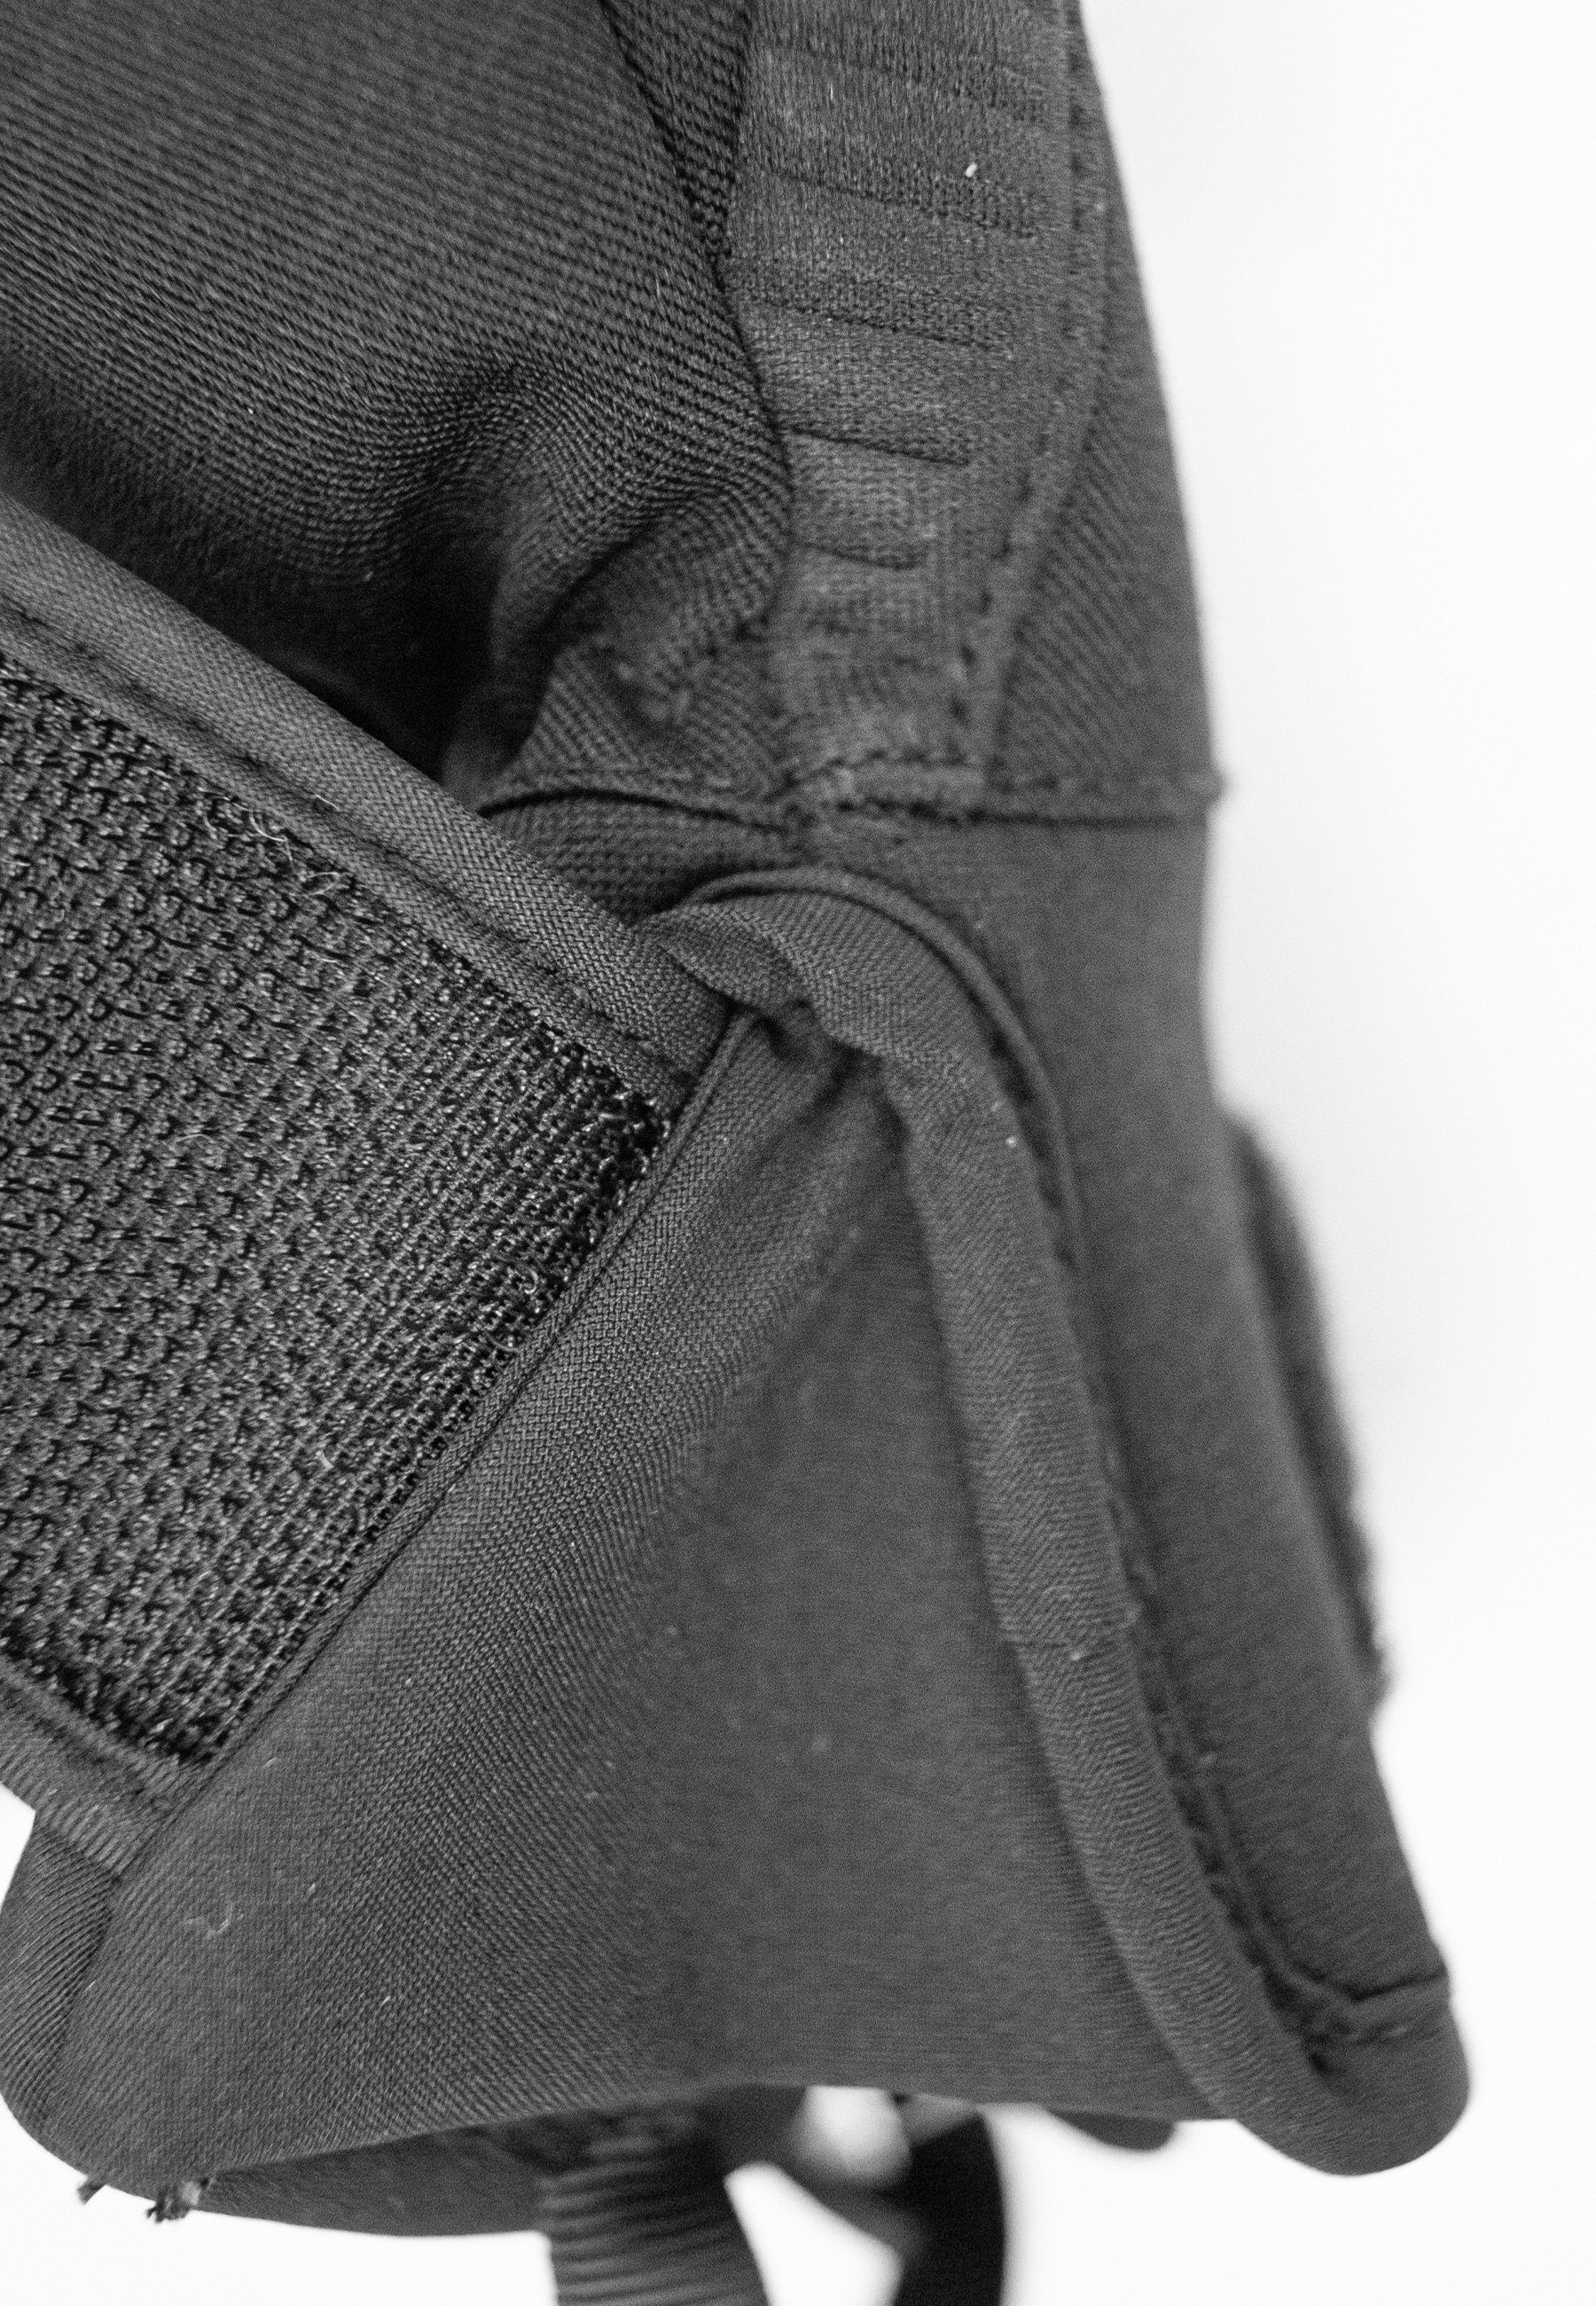 XT Reusch wasserdichtem Skihandschuhe schwarz-schwarz aus und atmungsaktivem Material Venom R-TEX®